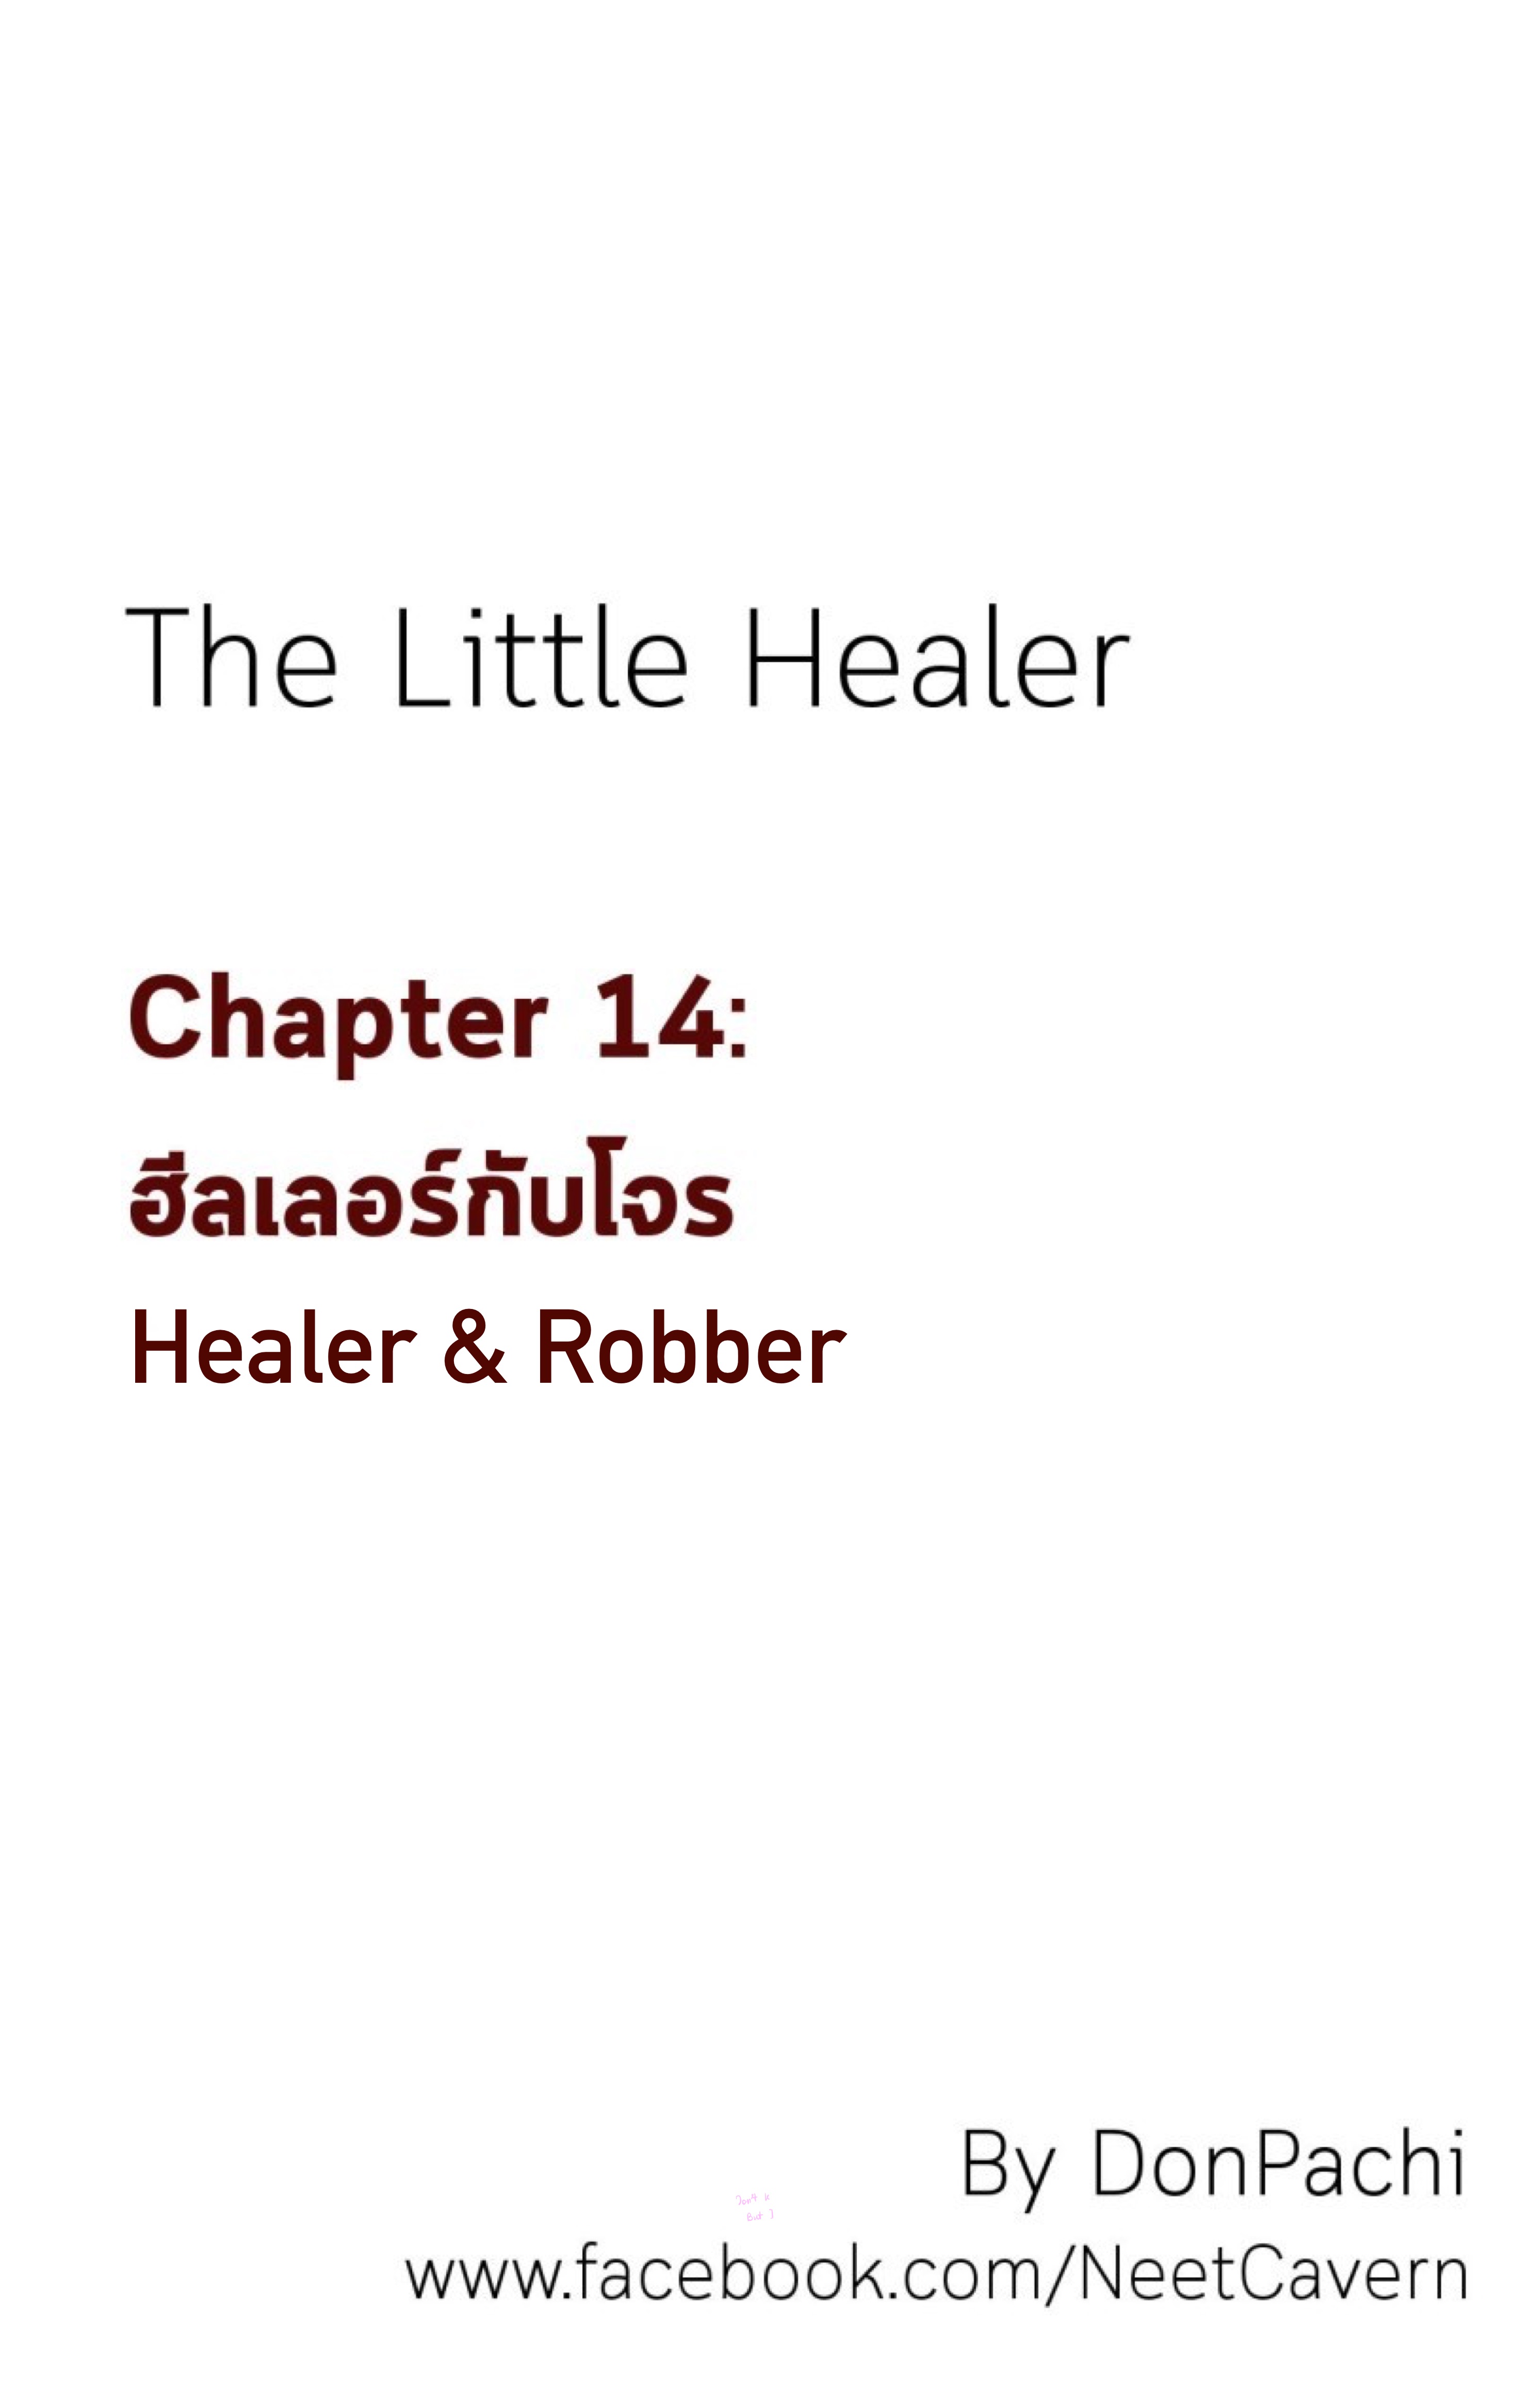 The Little Healer Chapter 14: Healer & Robber - Picture 2